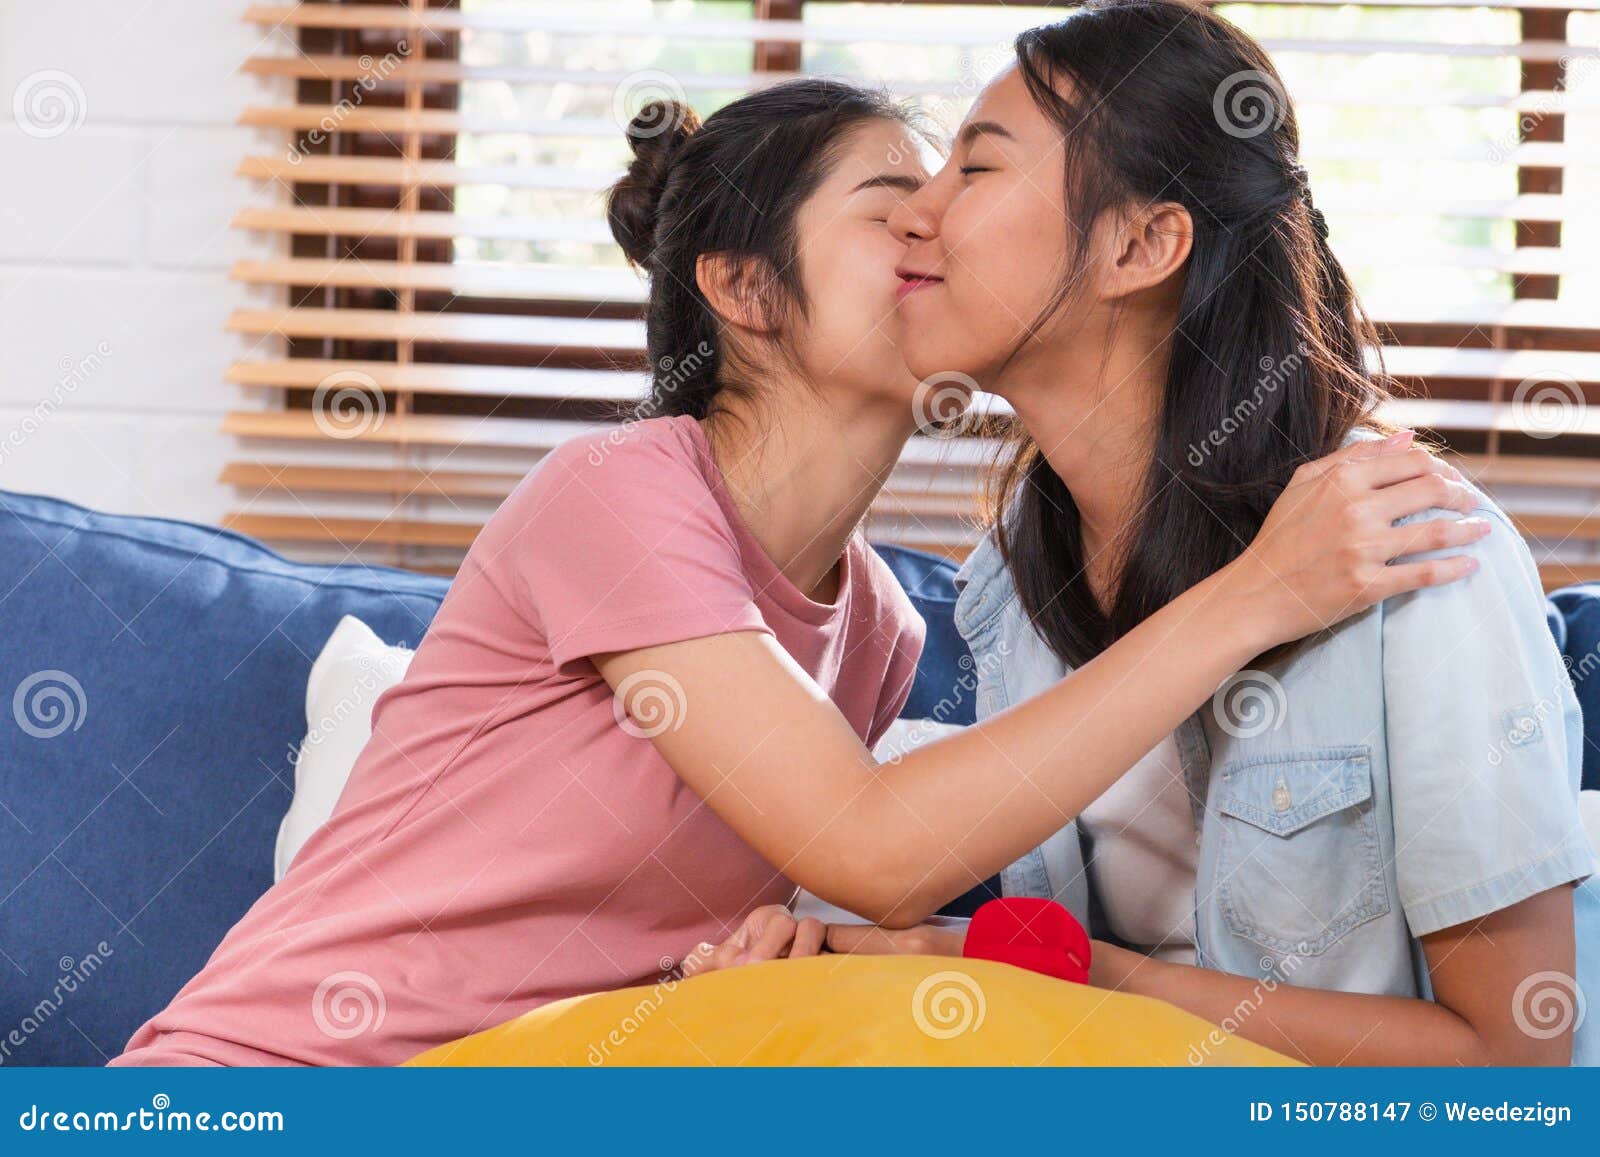 skinny asian lesbian anal